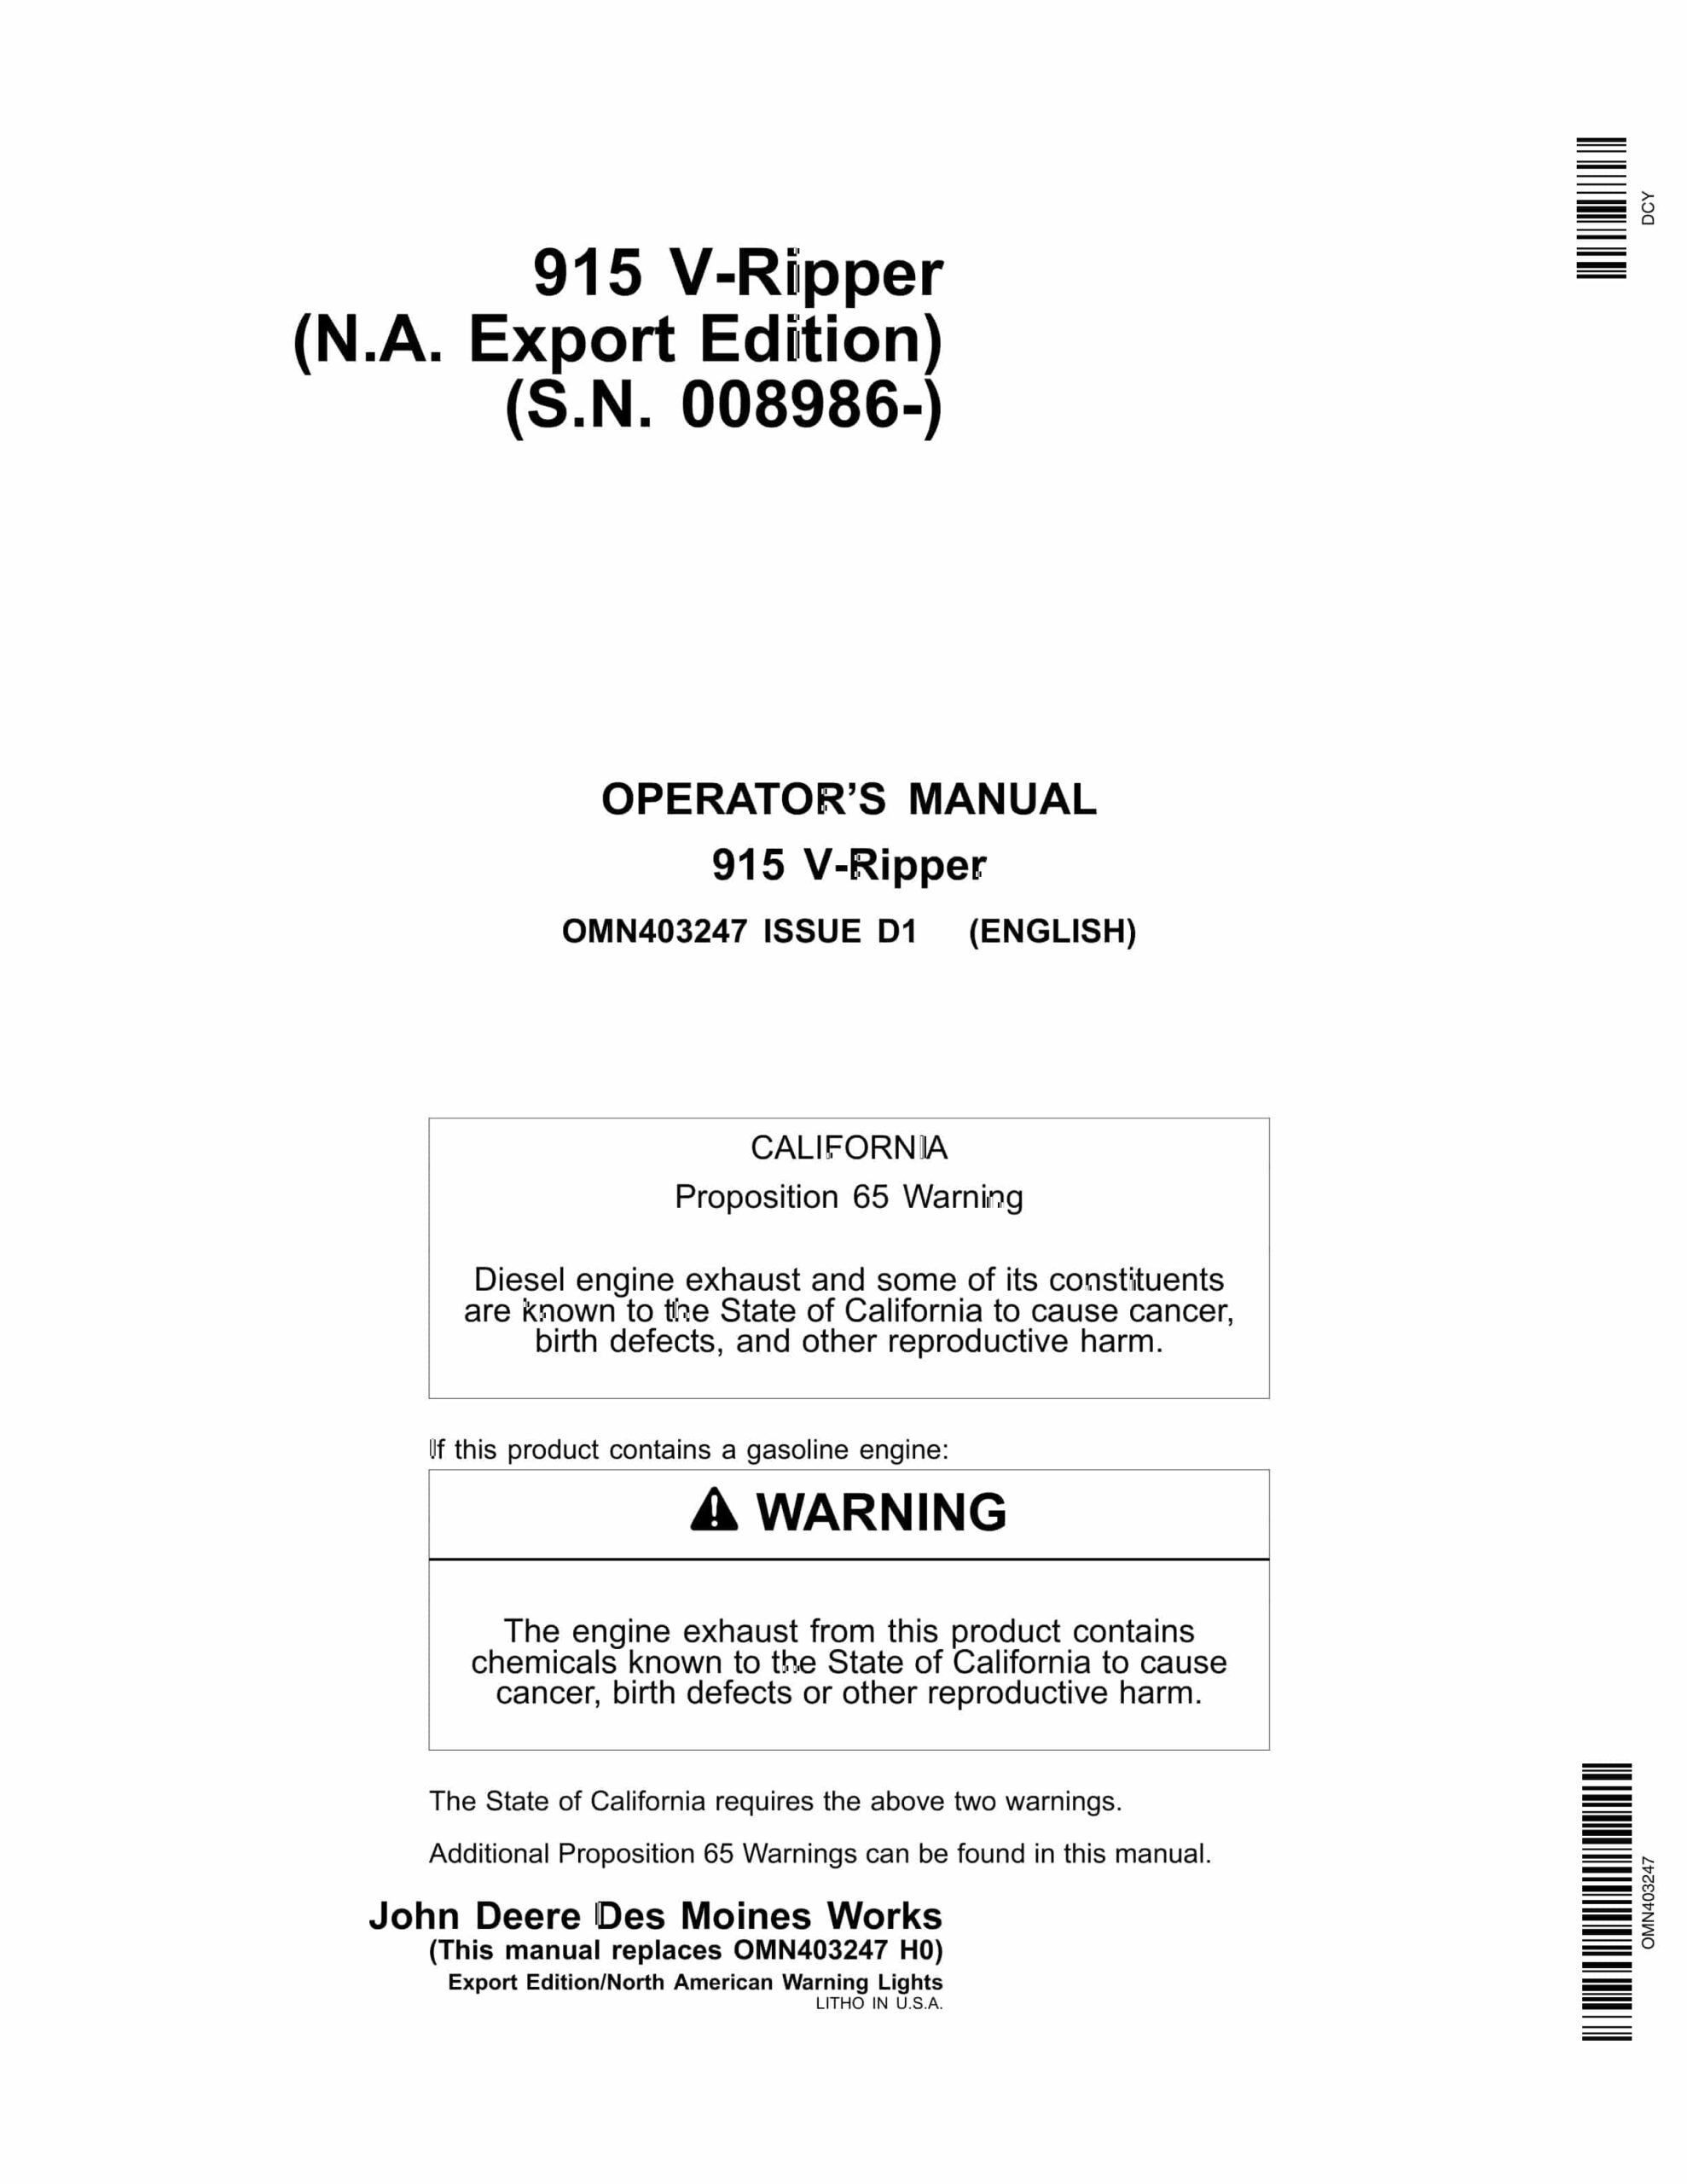 John Deere 915 V­Ripper Operator Manual OMN403247-1